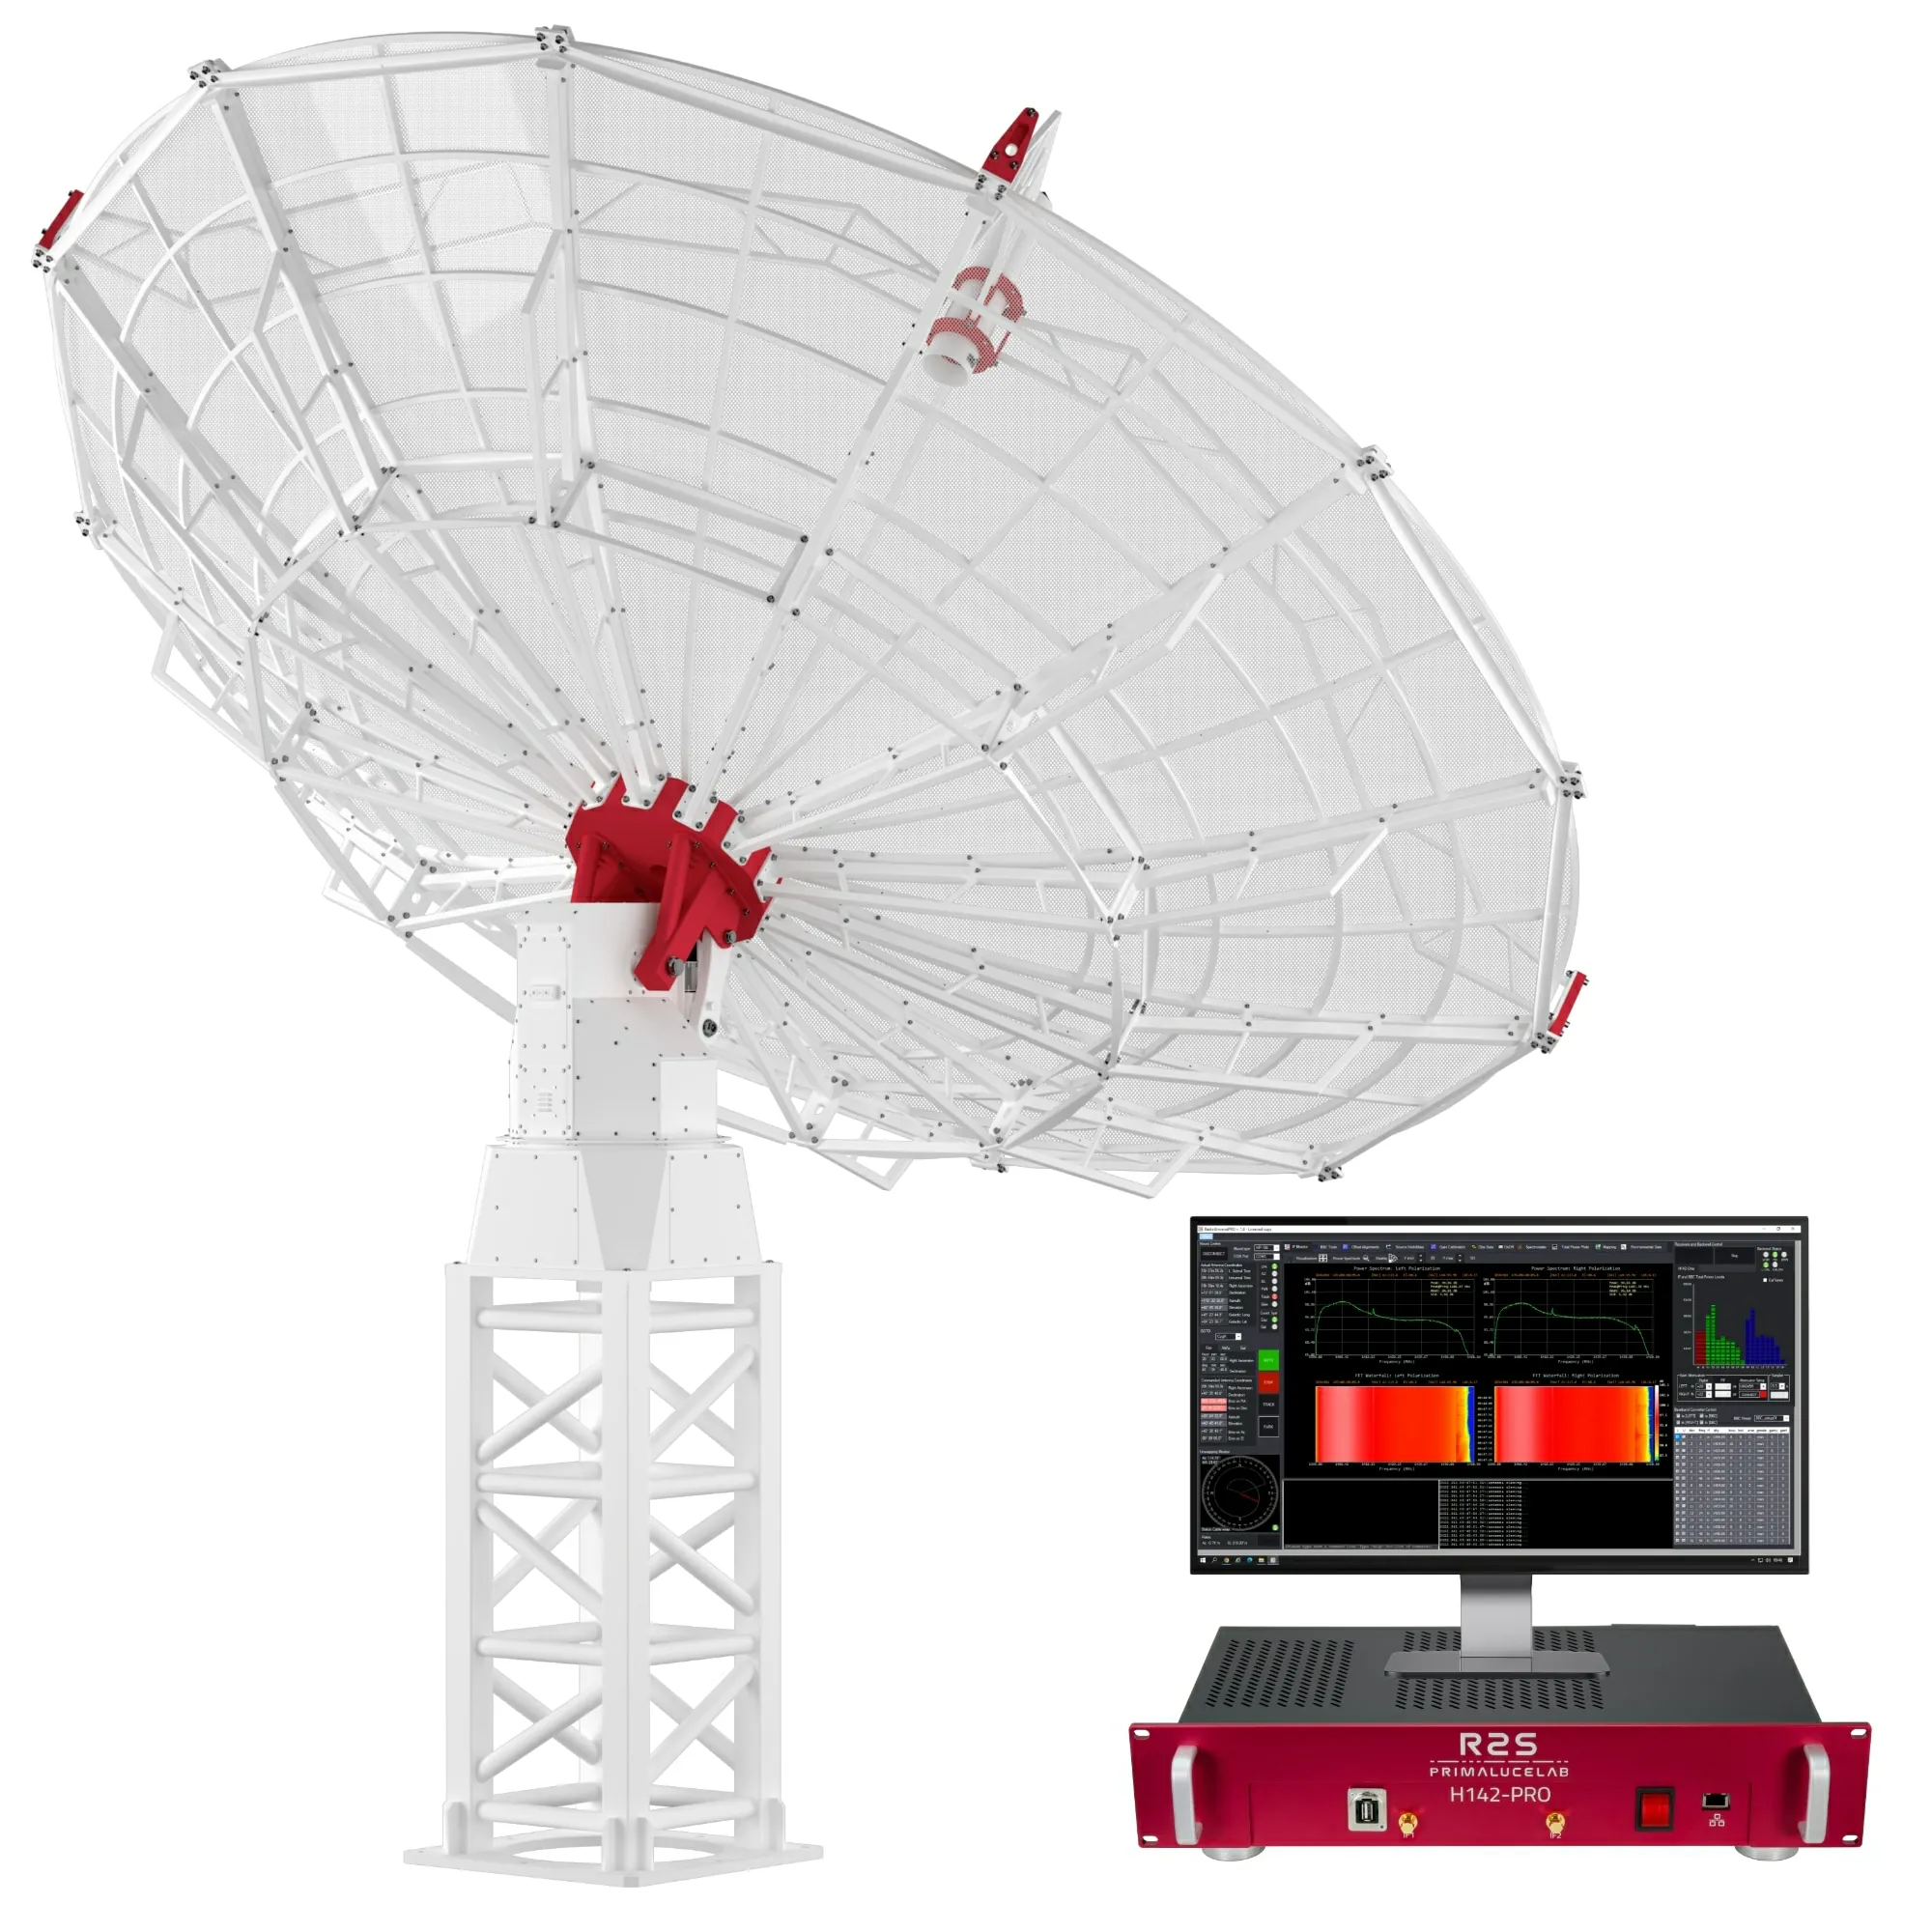 SPIDER 500A MarkII radiotelescopio professionale 5.0 metri